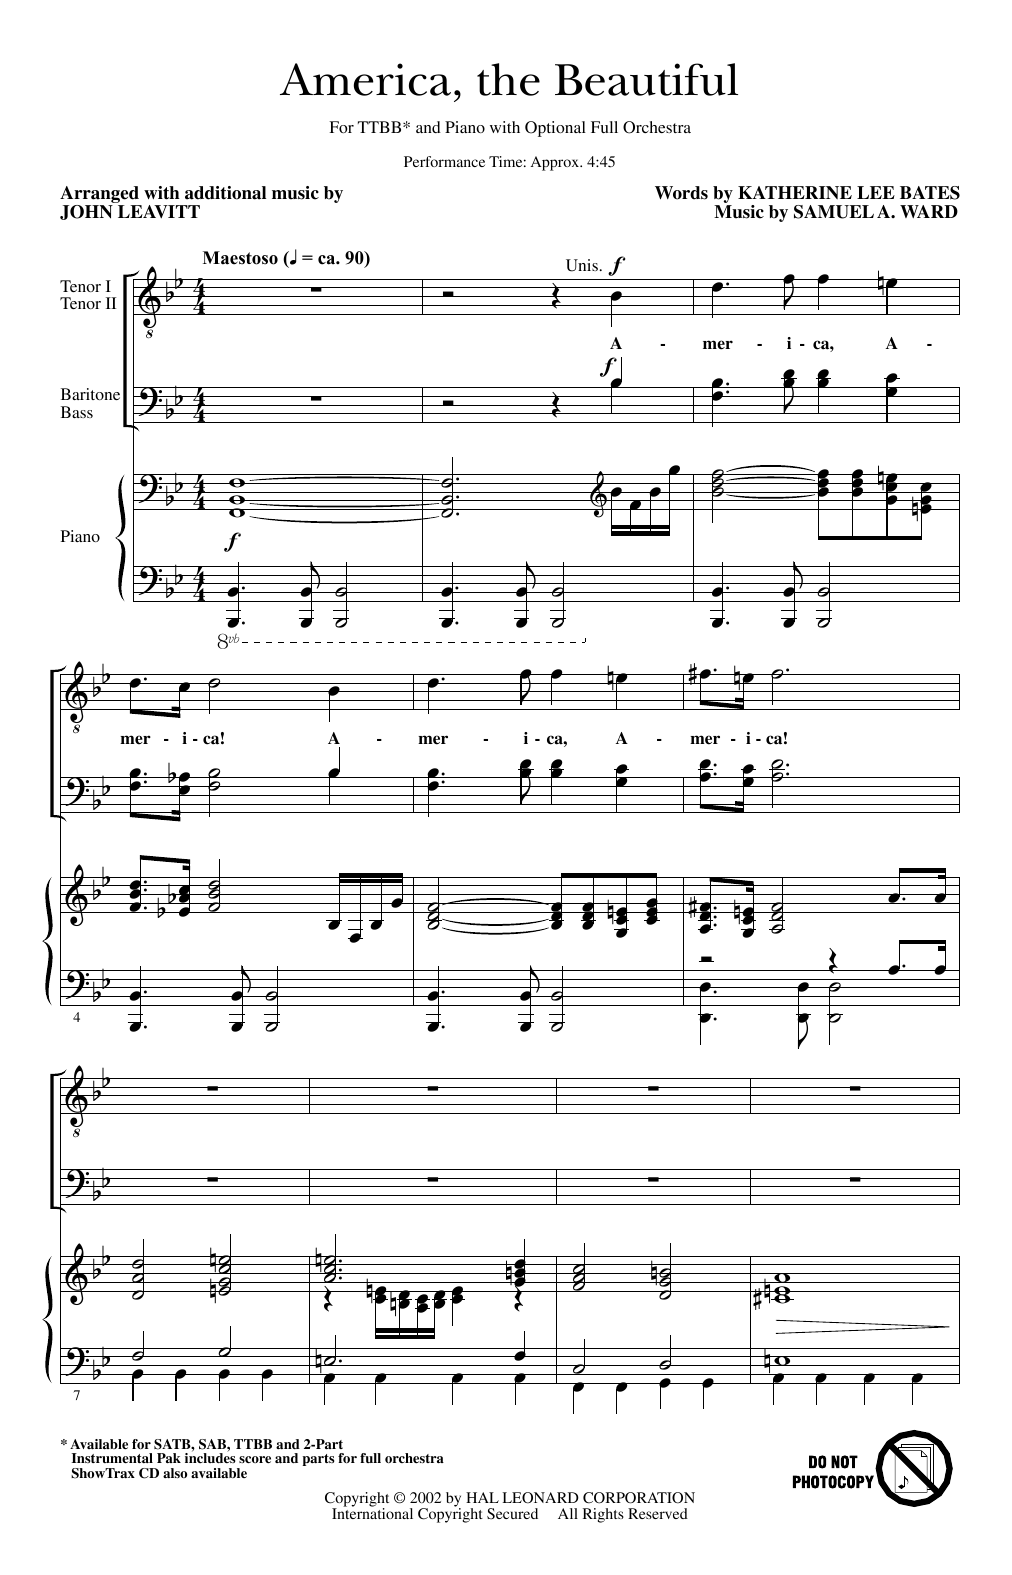 Download Samuel A. Ward America, The Beautiful (arr. John Leavitt) Sheet Music and learn how to play TTBB Choir PDF digital score in minutes